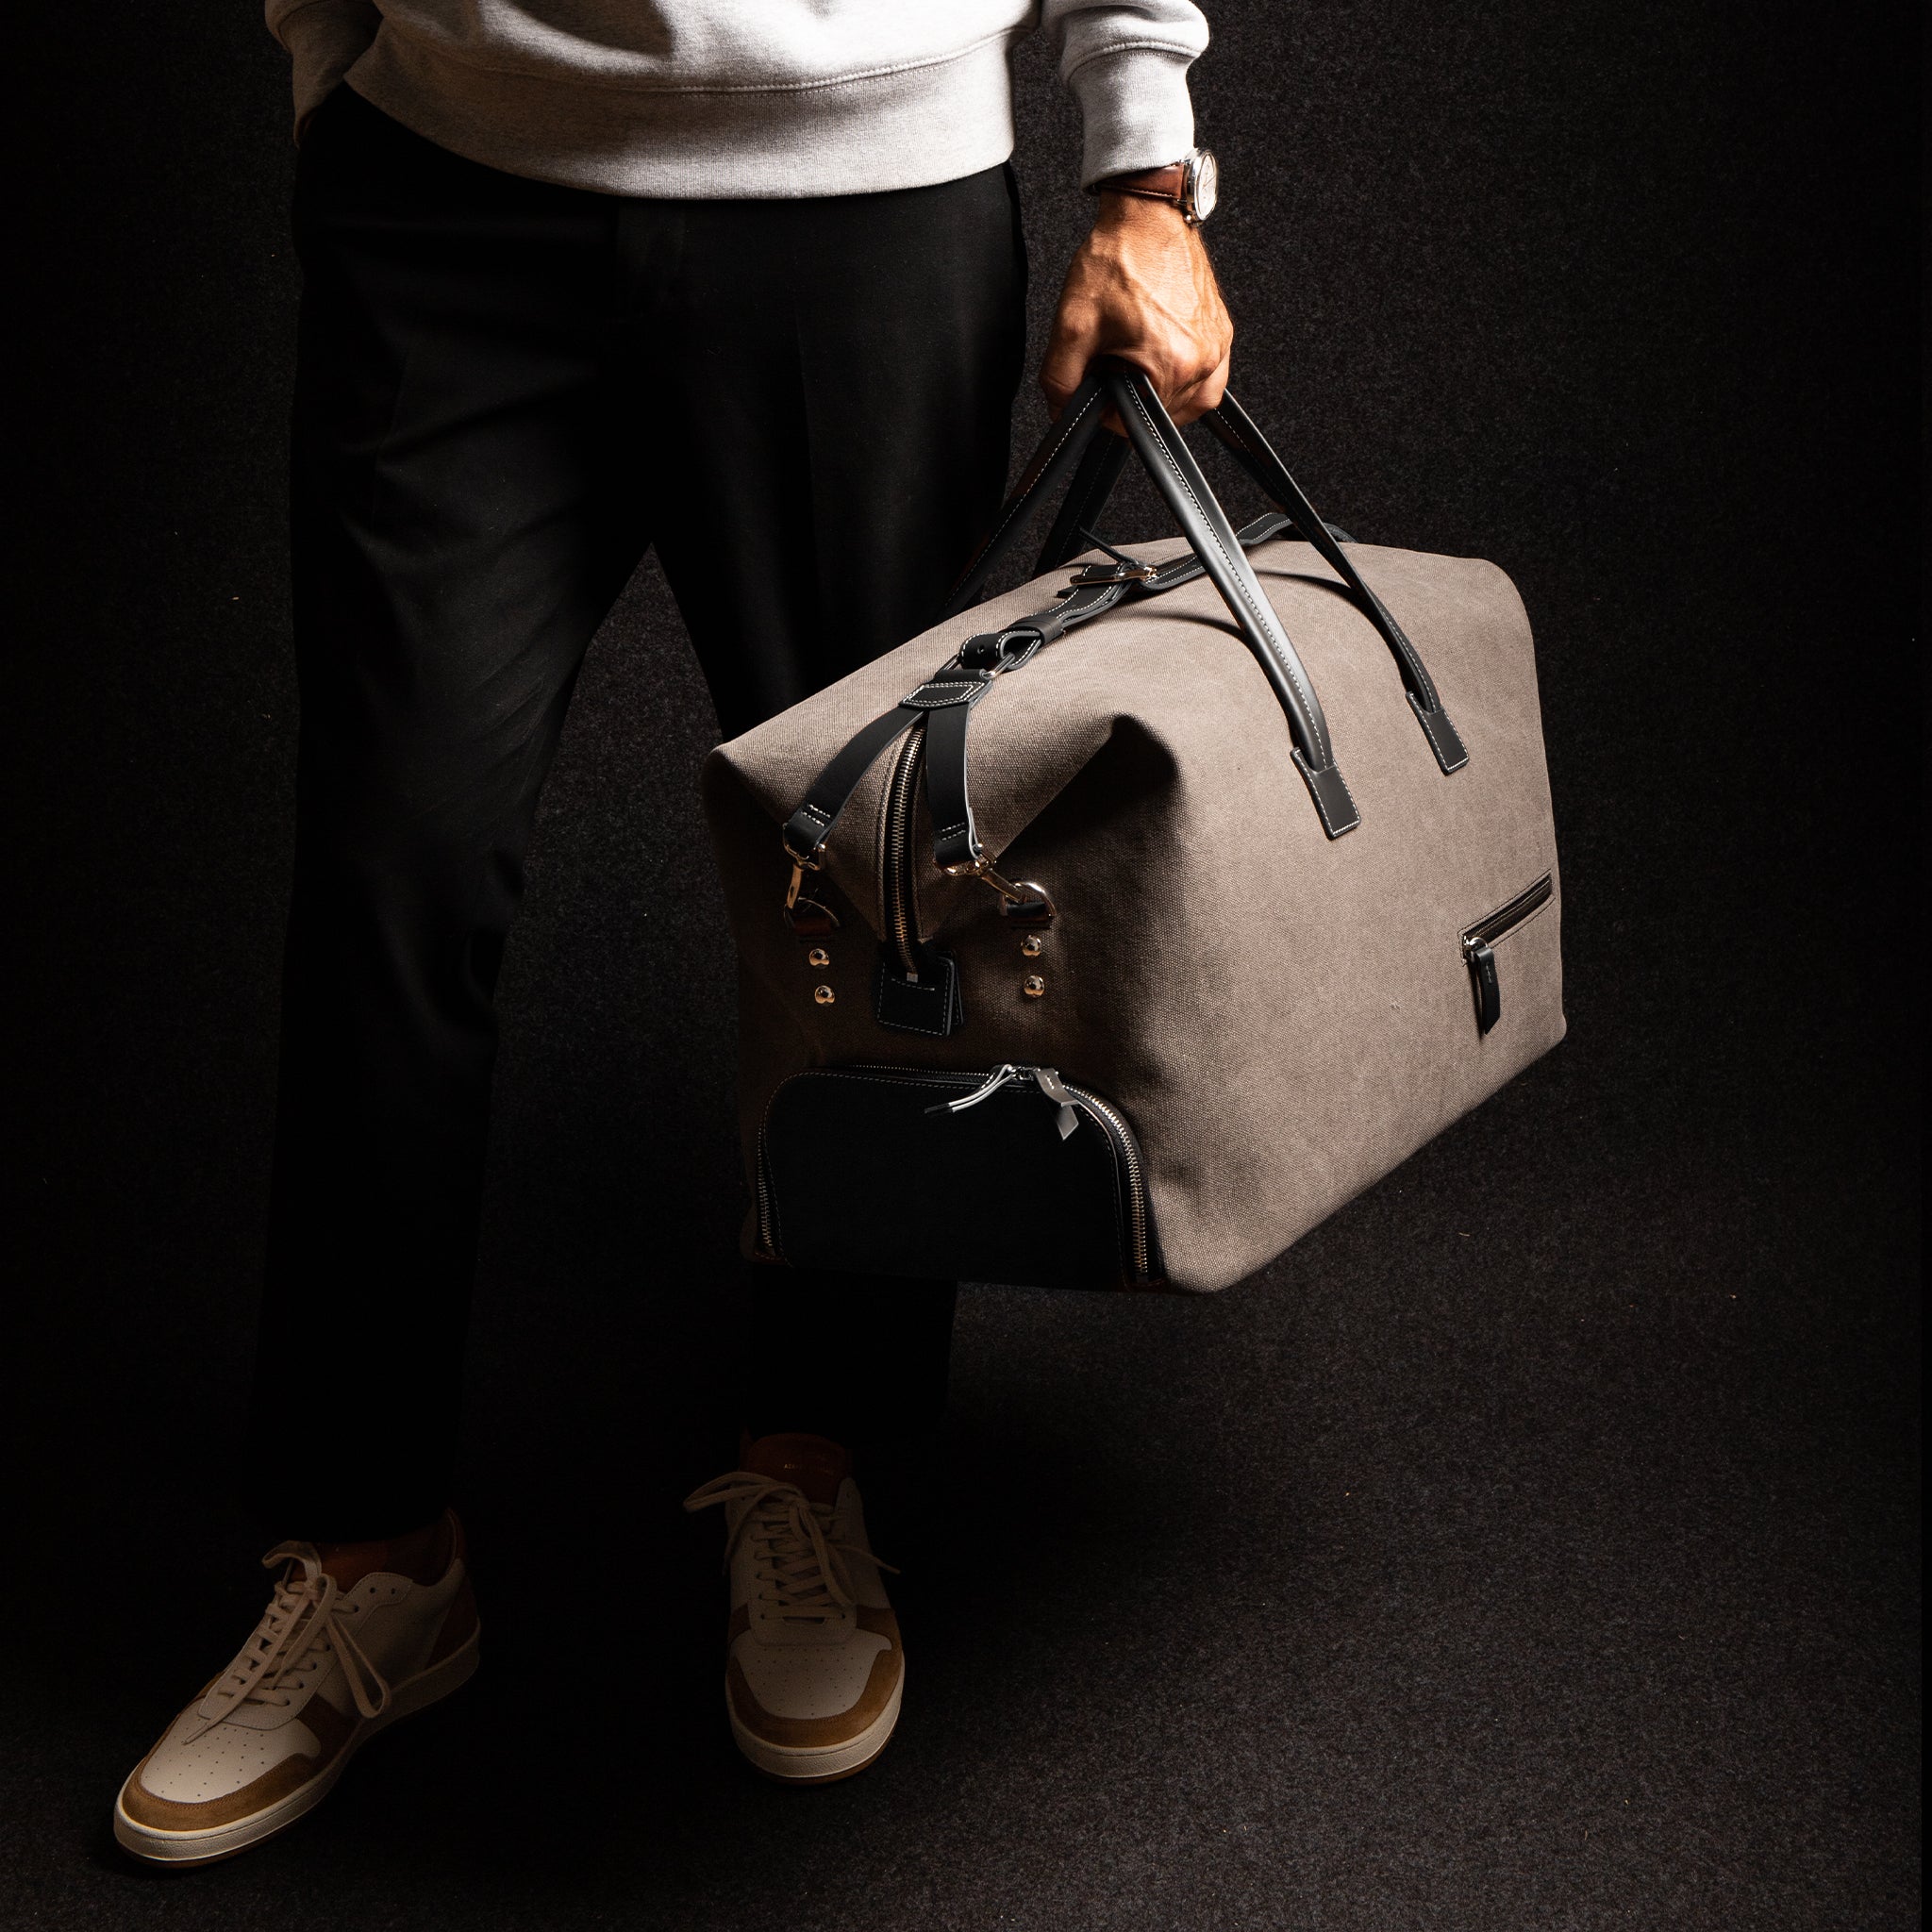 lundi Travel bag | REMINGTON Gray and black